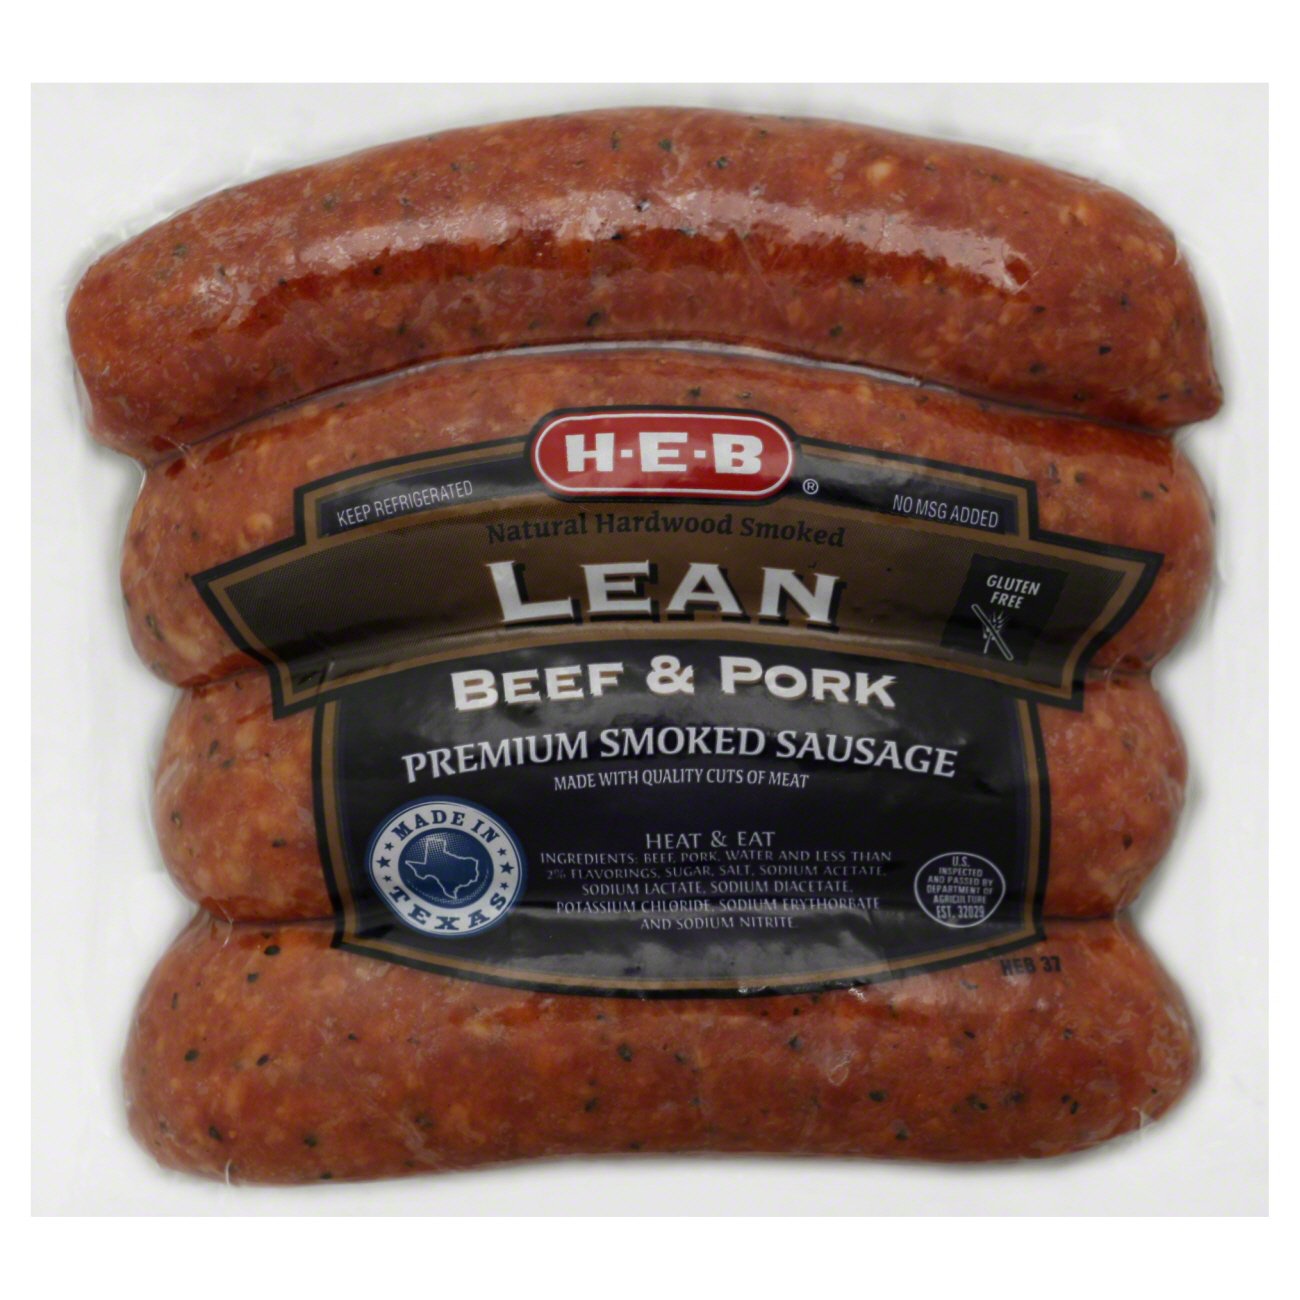 H E B Premium Hardwood Smoked Lean Beef And Pork Sausage Shop Sausage At H E B